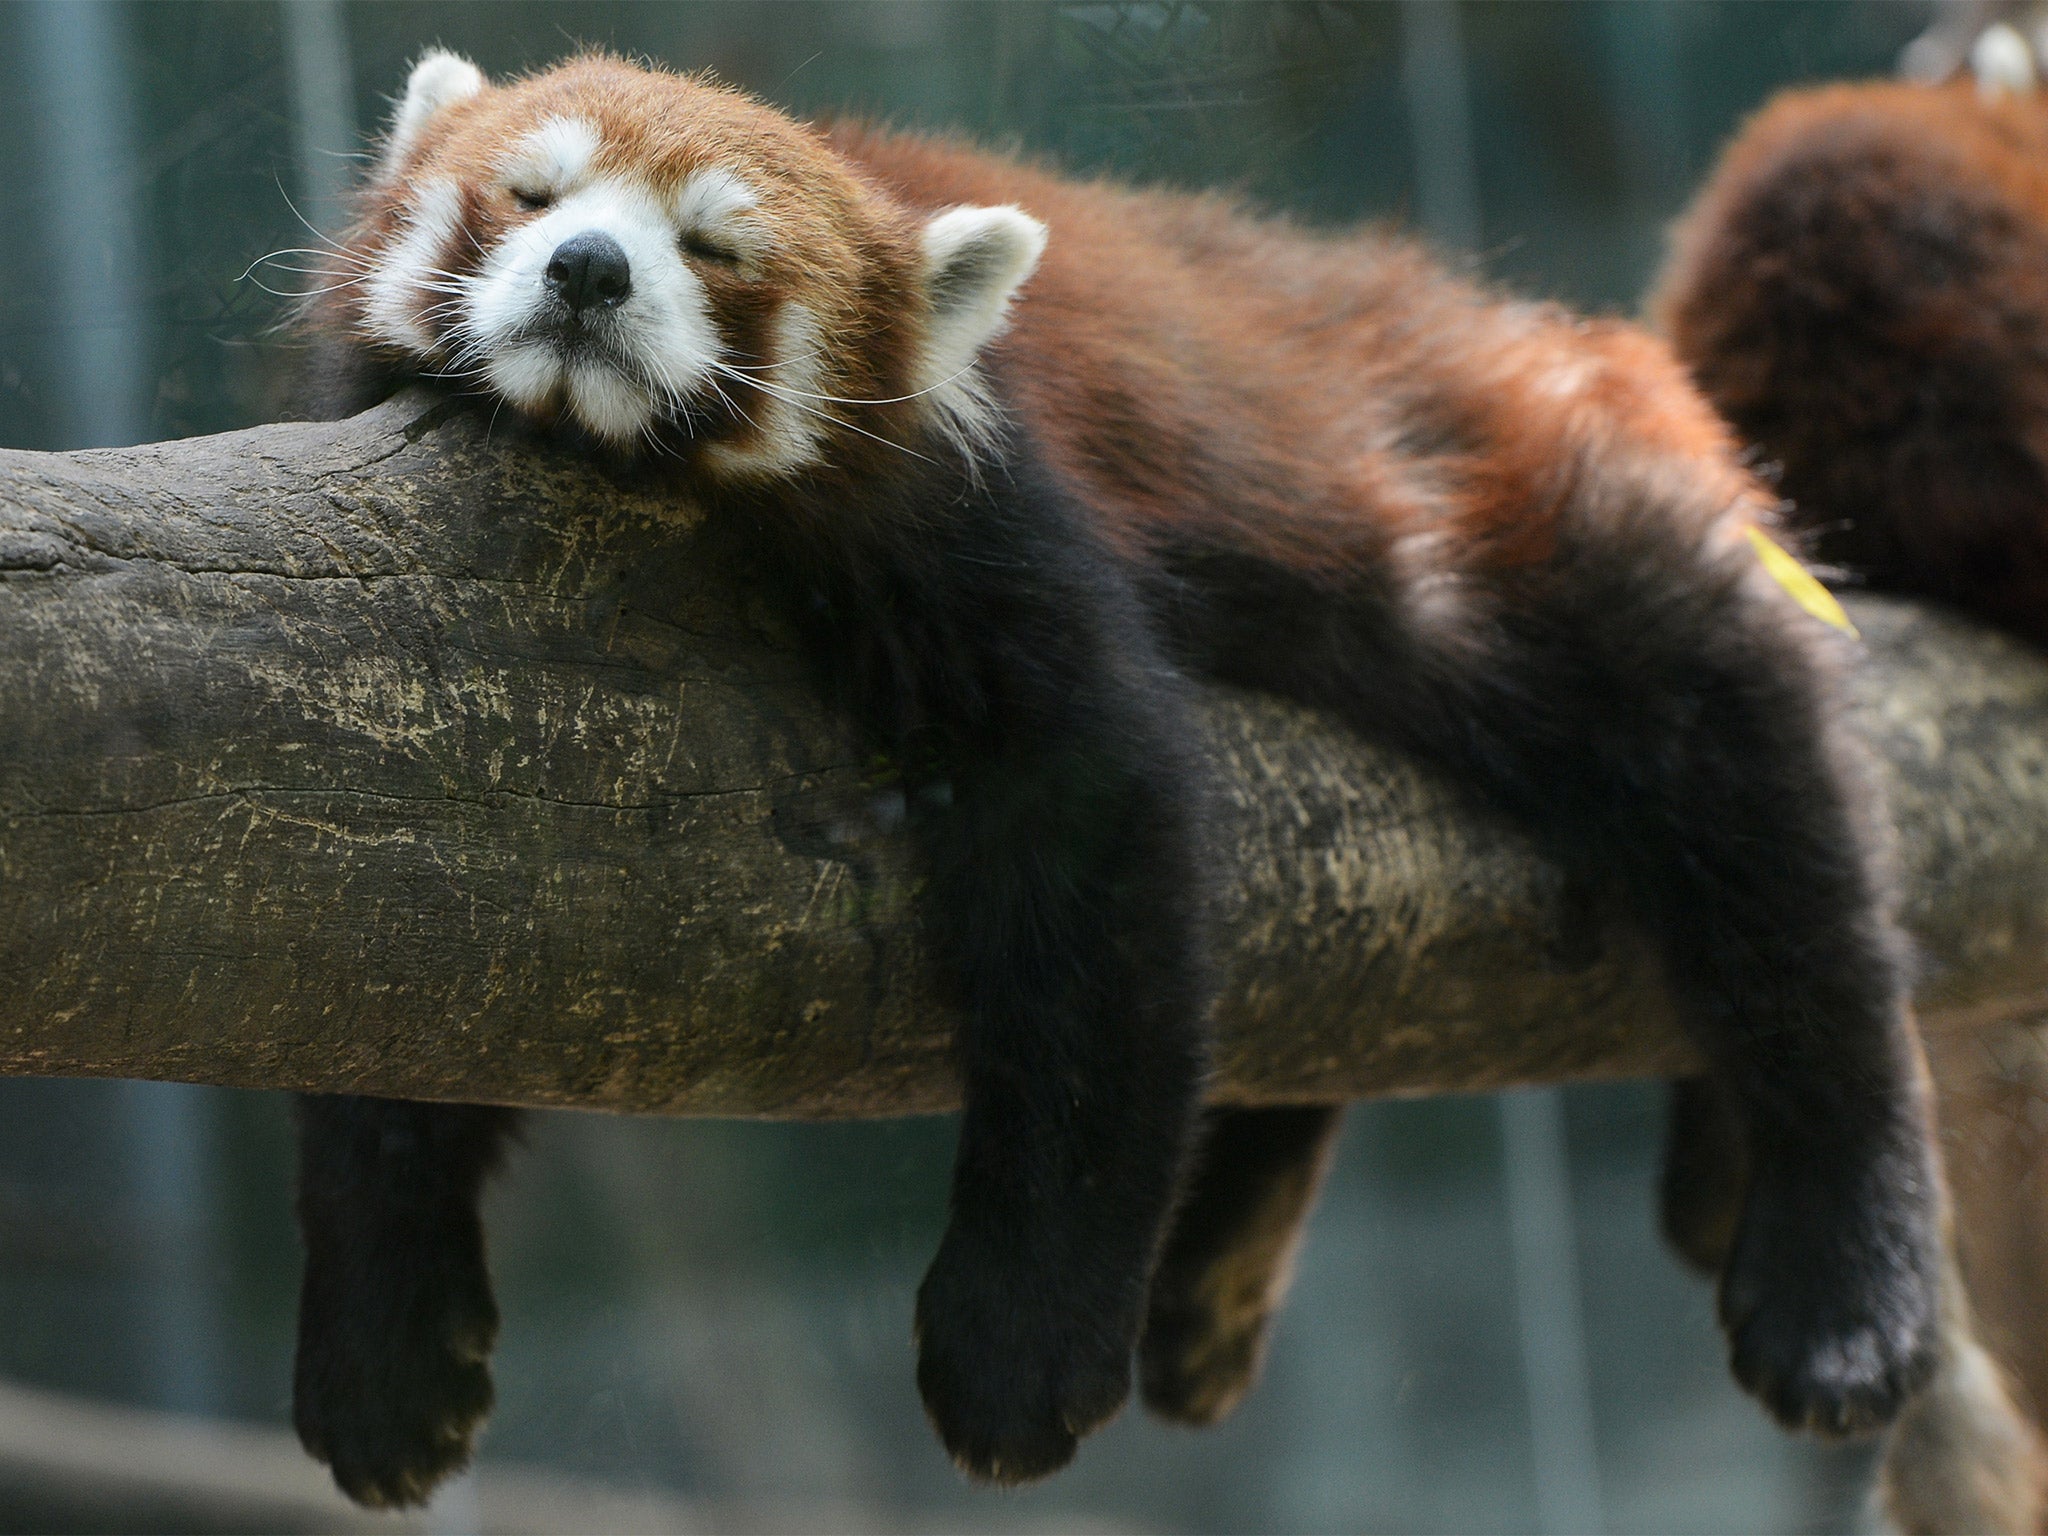 Animal magic: red pandas are threatened in their natural habitat